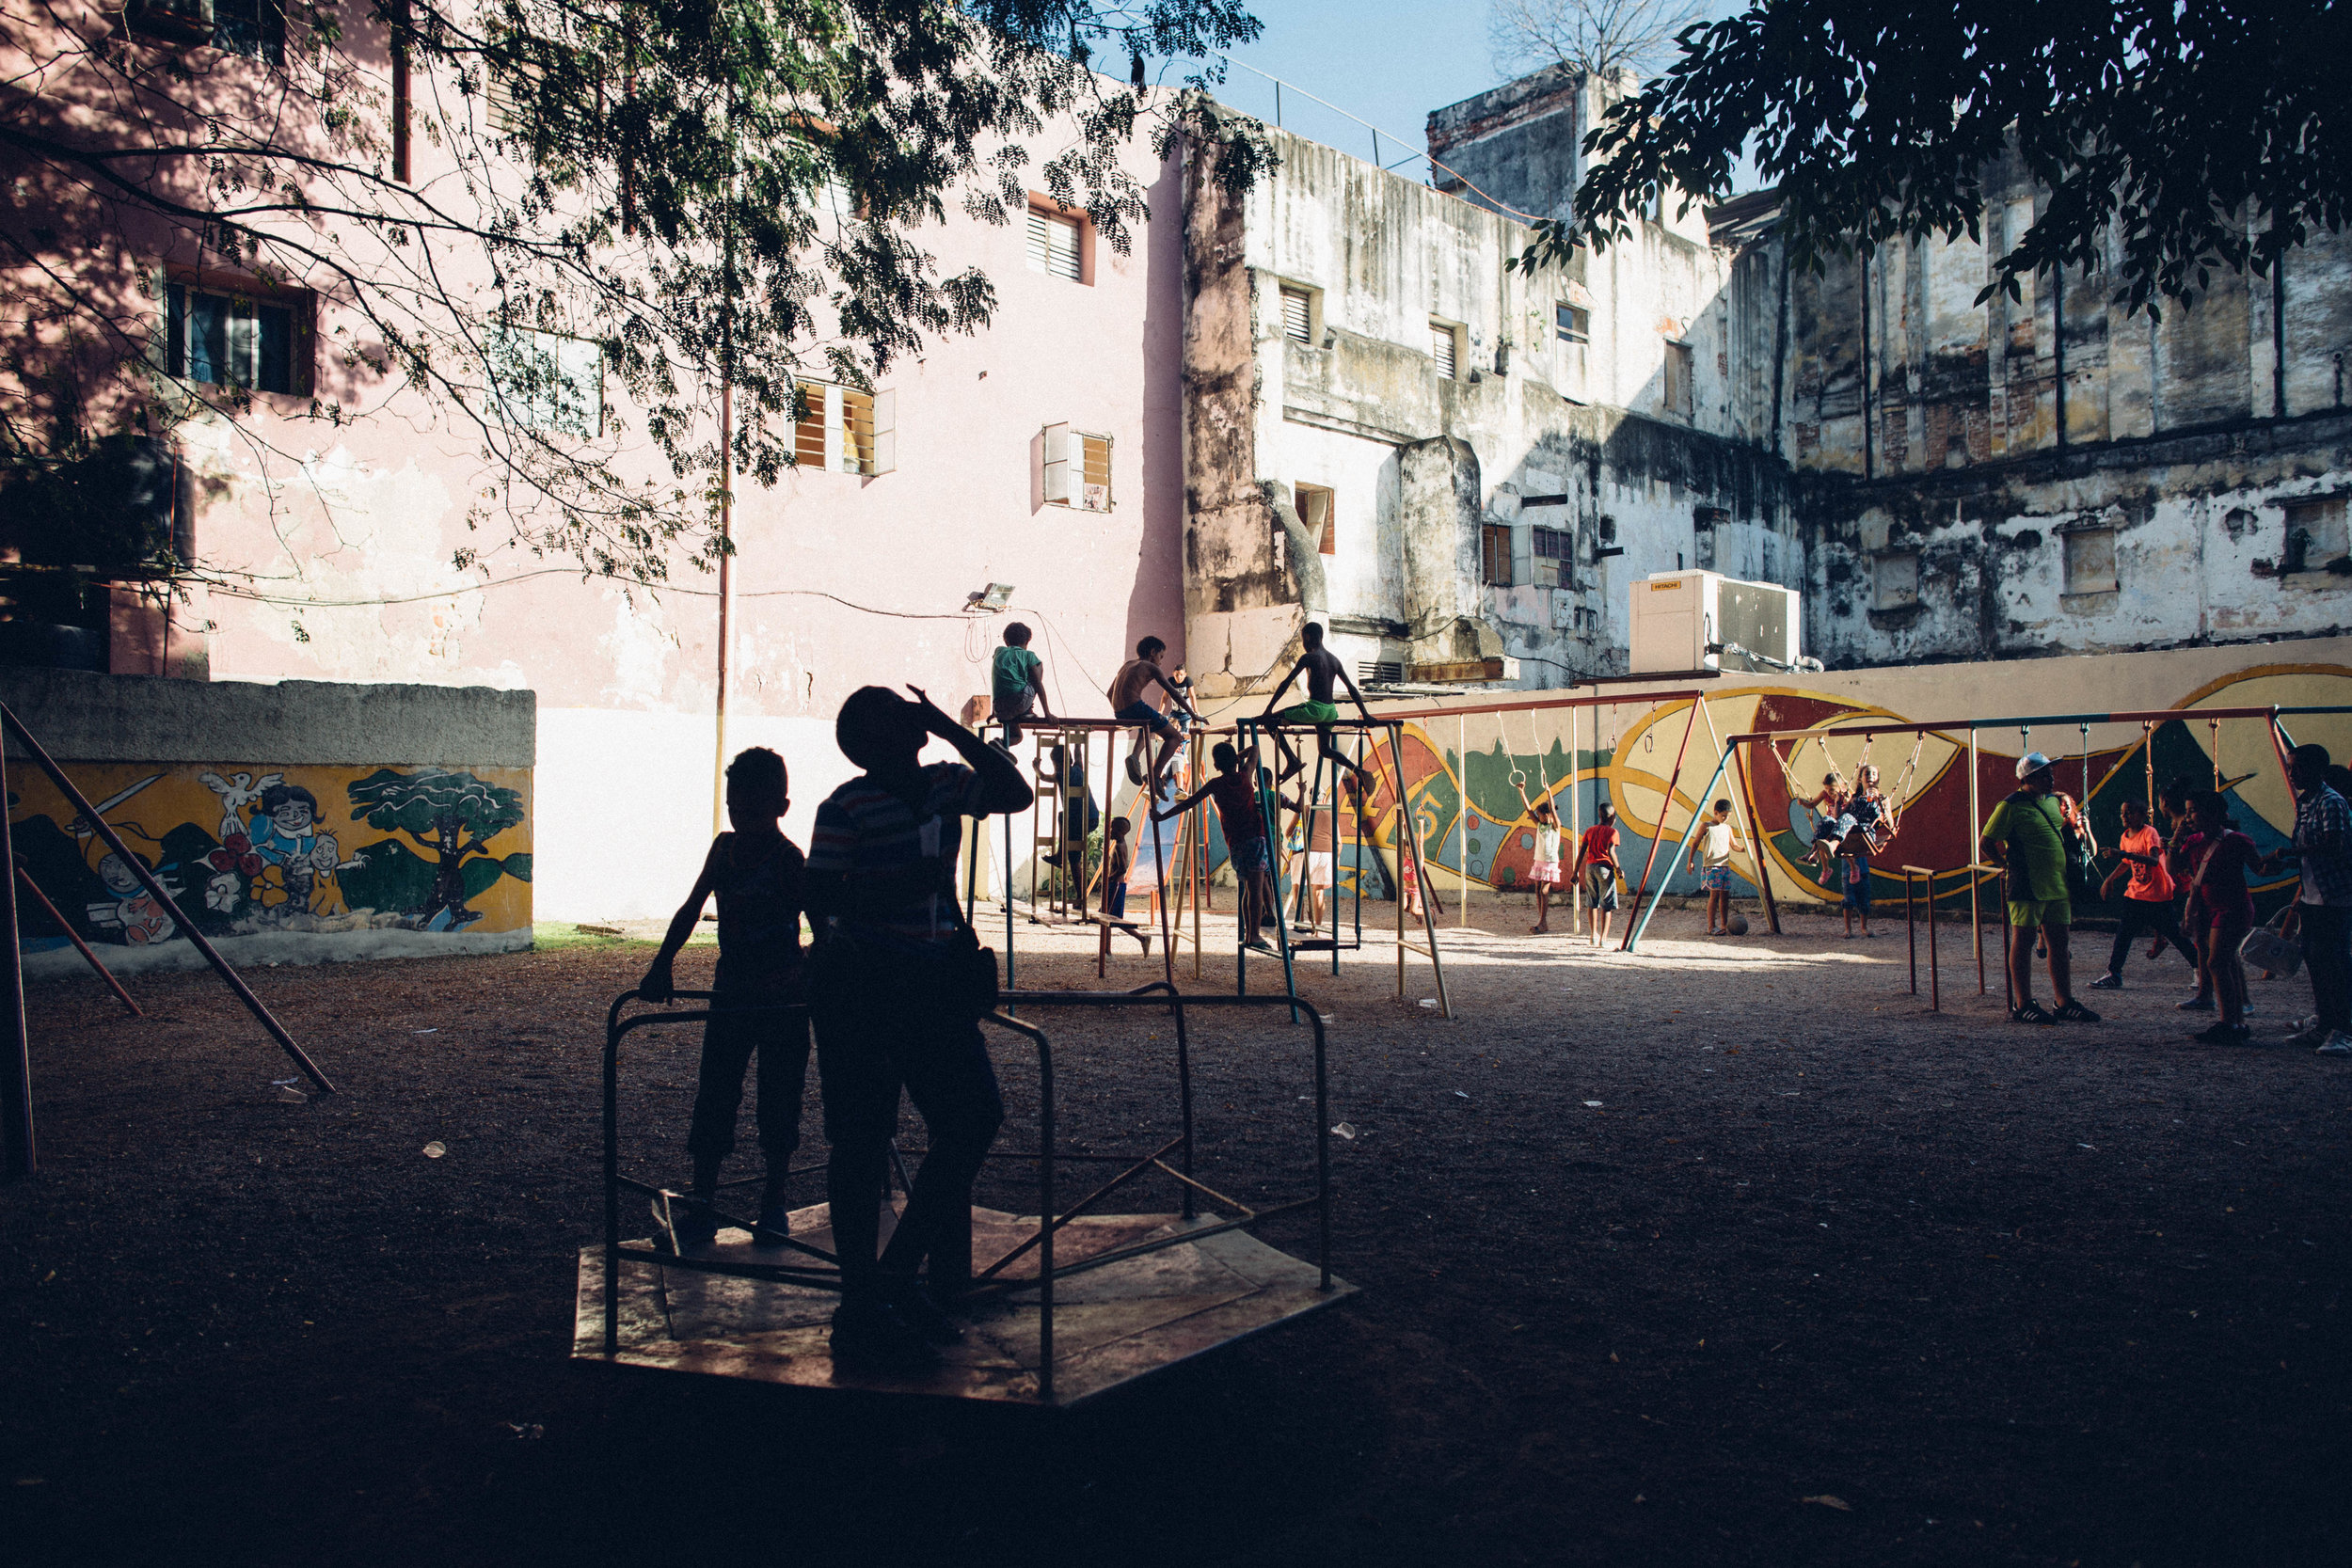   Kids play at playground on Calle San Rafael. Havana, Cuba.  